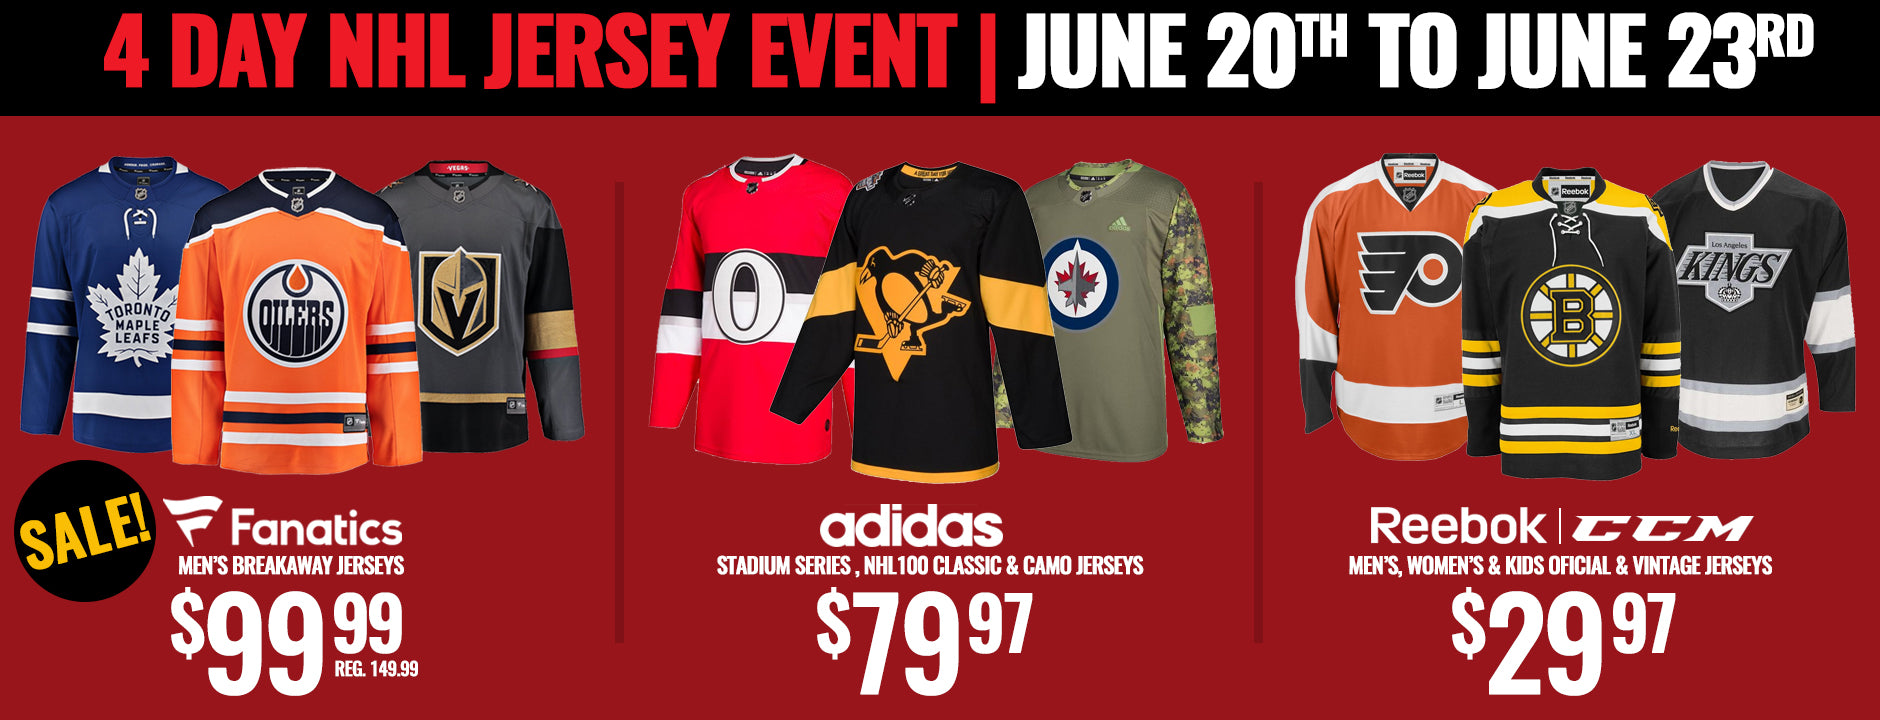 4-Day Jersey Event: Fanatics NHL Jerseys